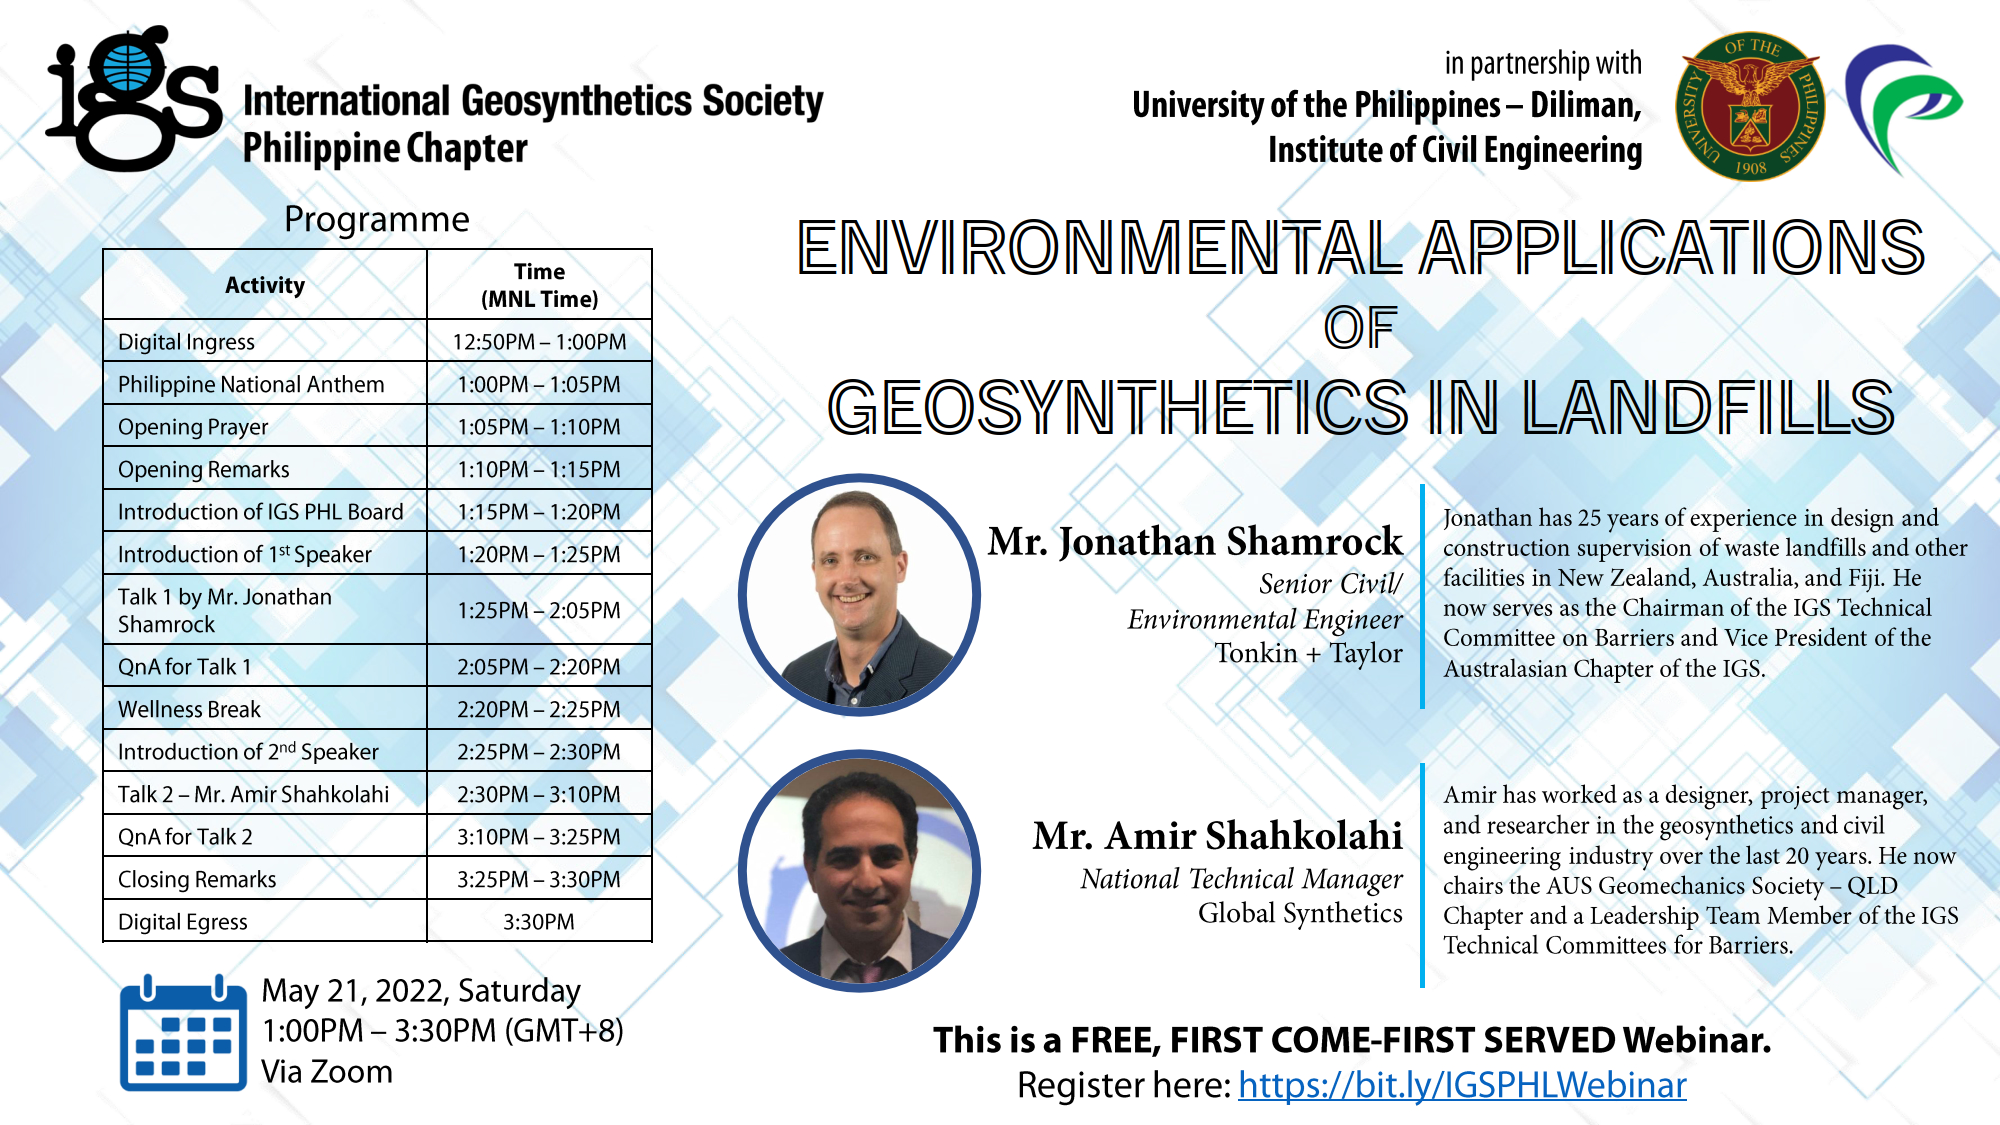 Webinar on Environmental Applications of Geosynthetics in Landfills.